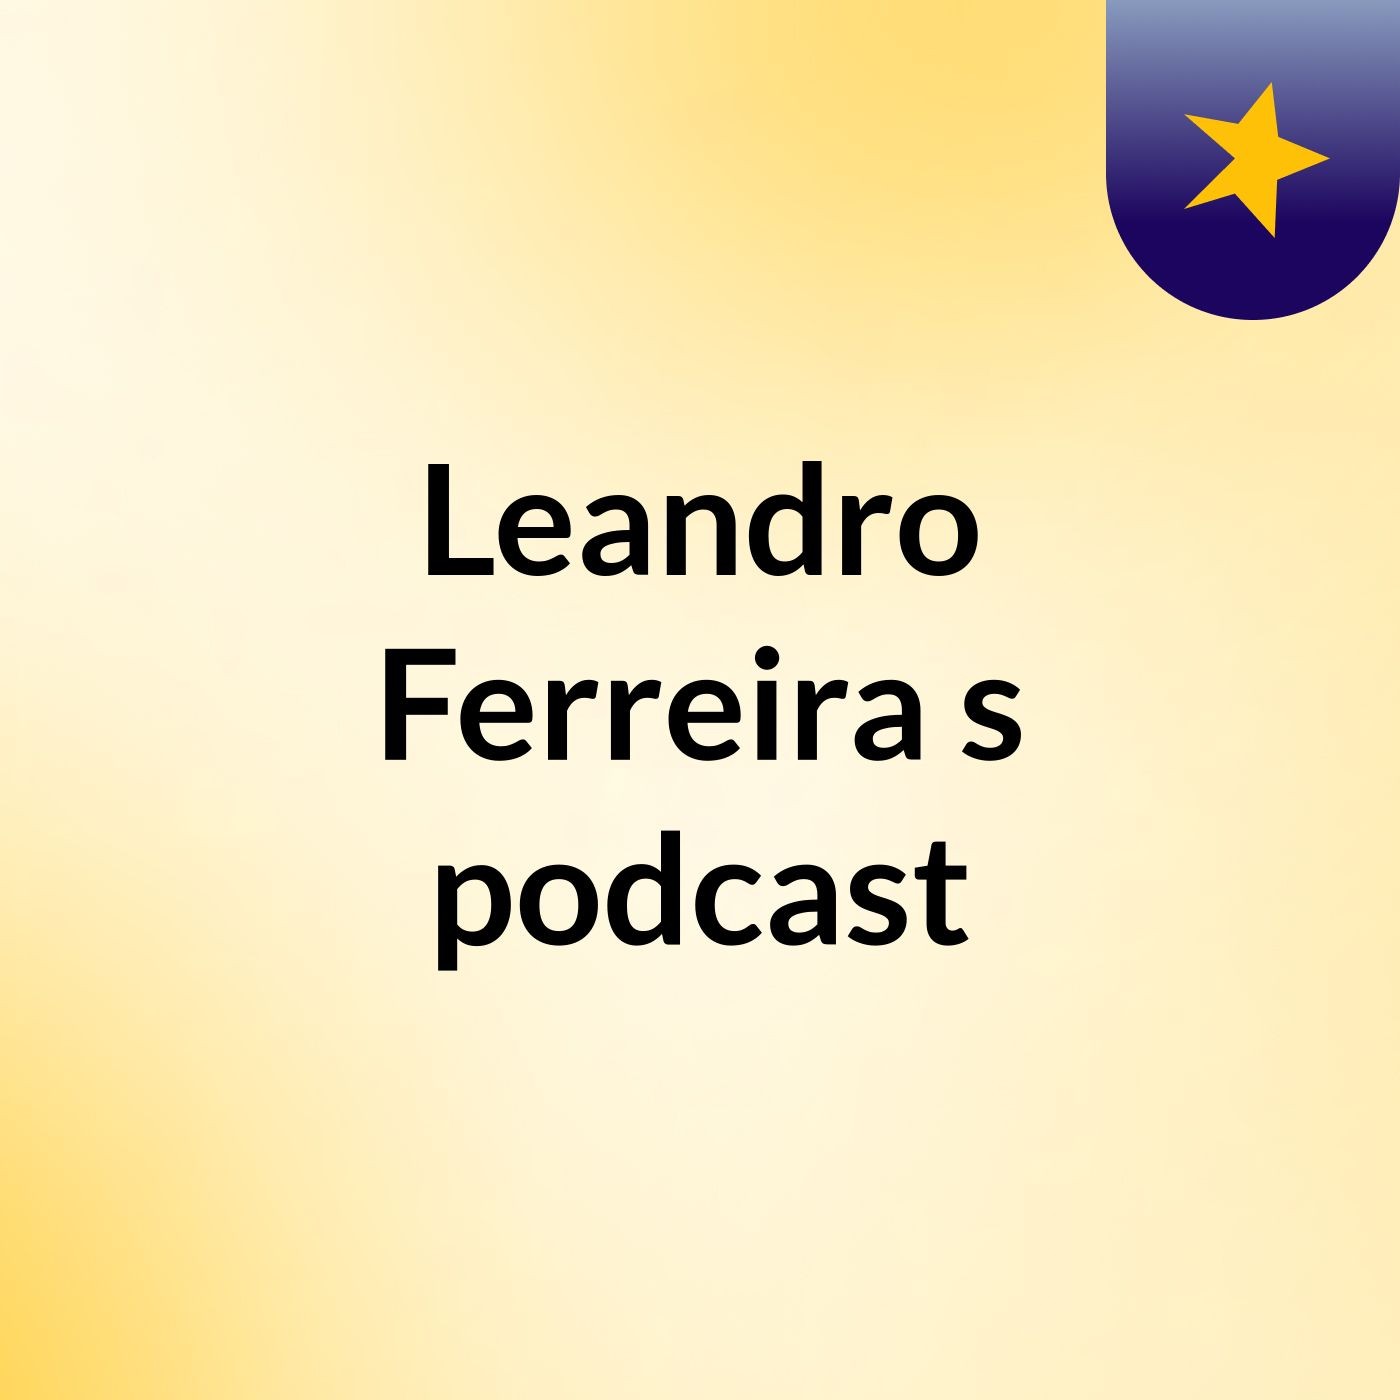 Leandro Ferreira's podcast